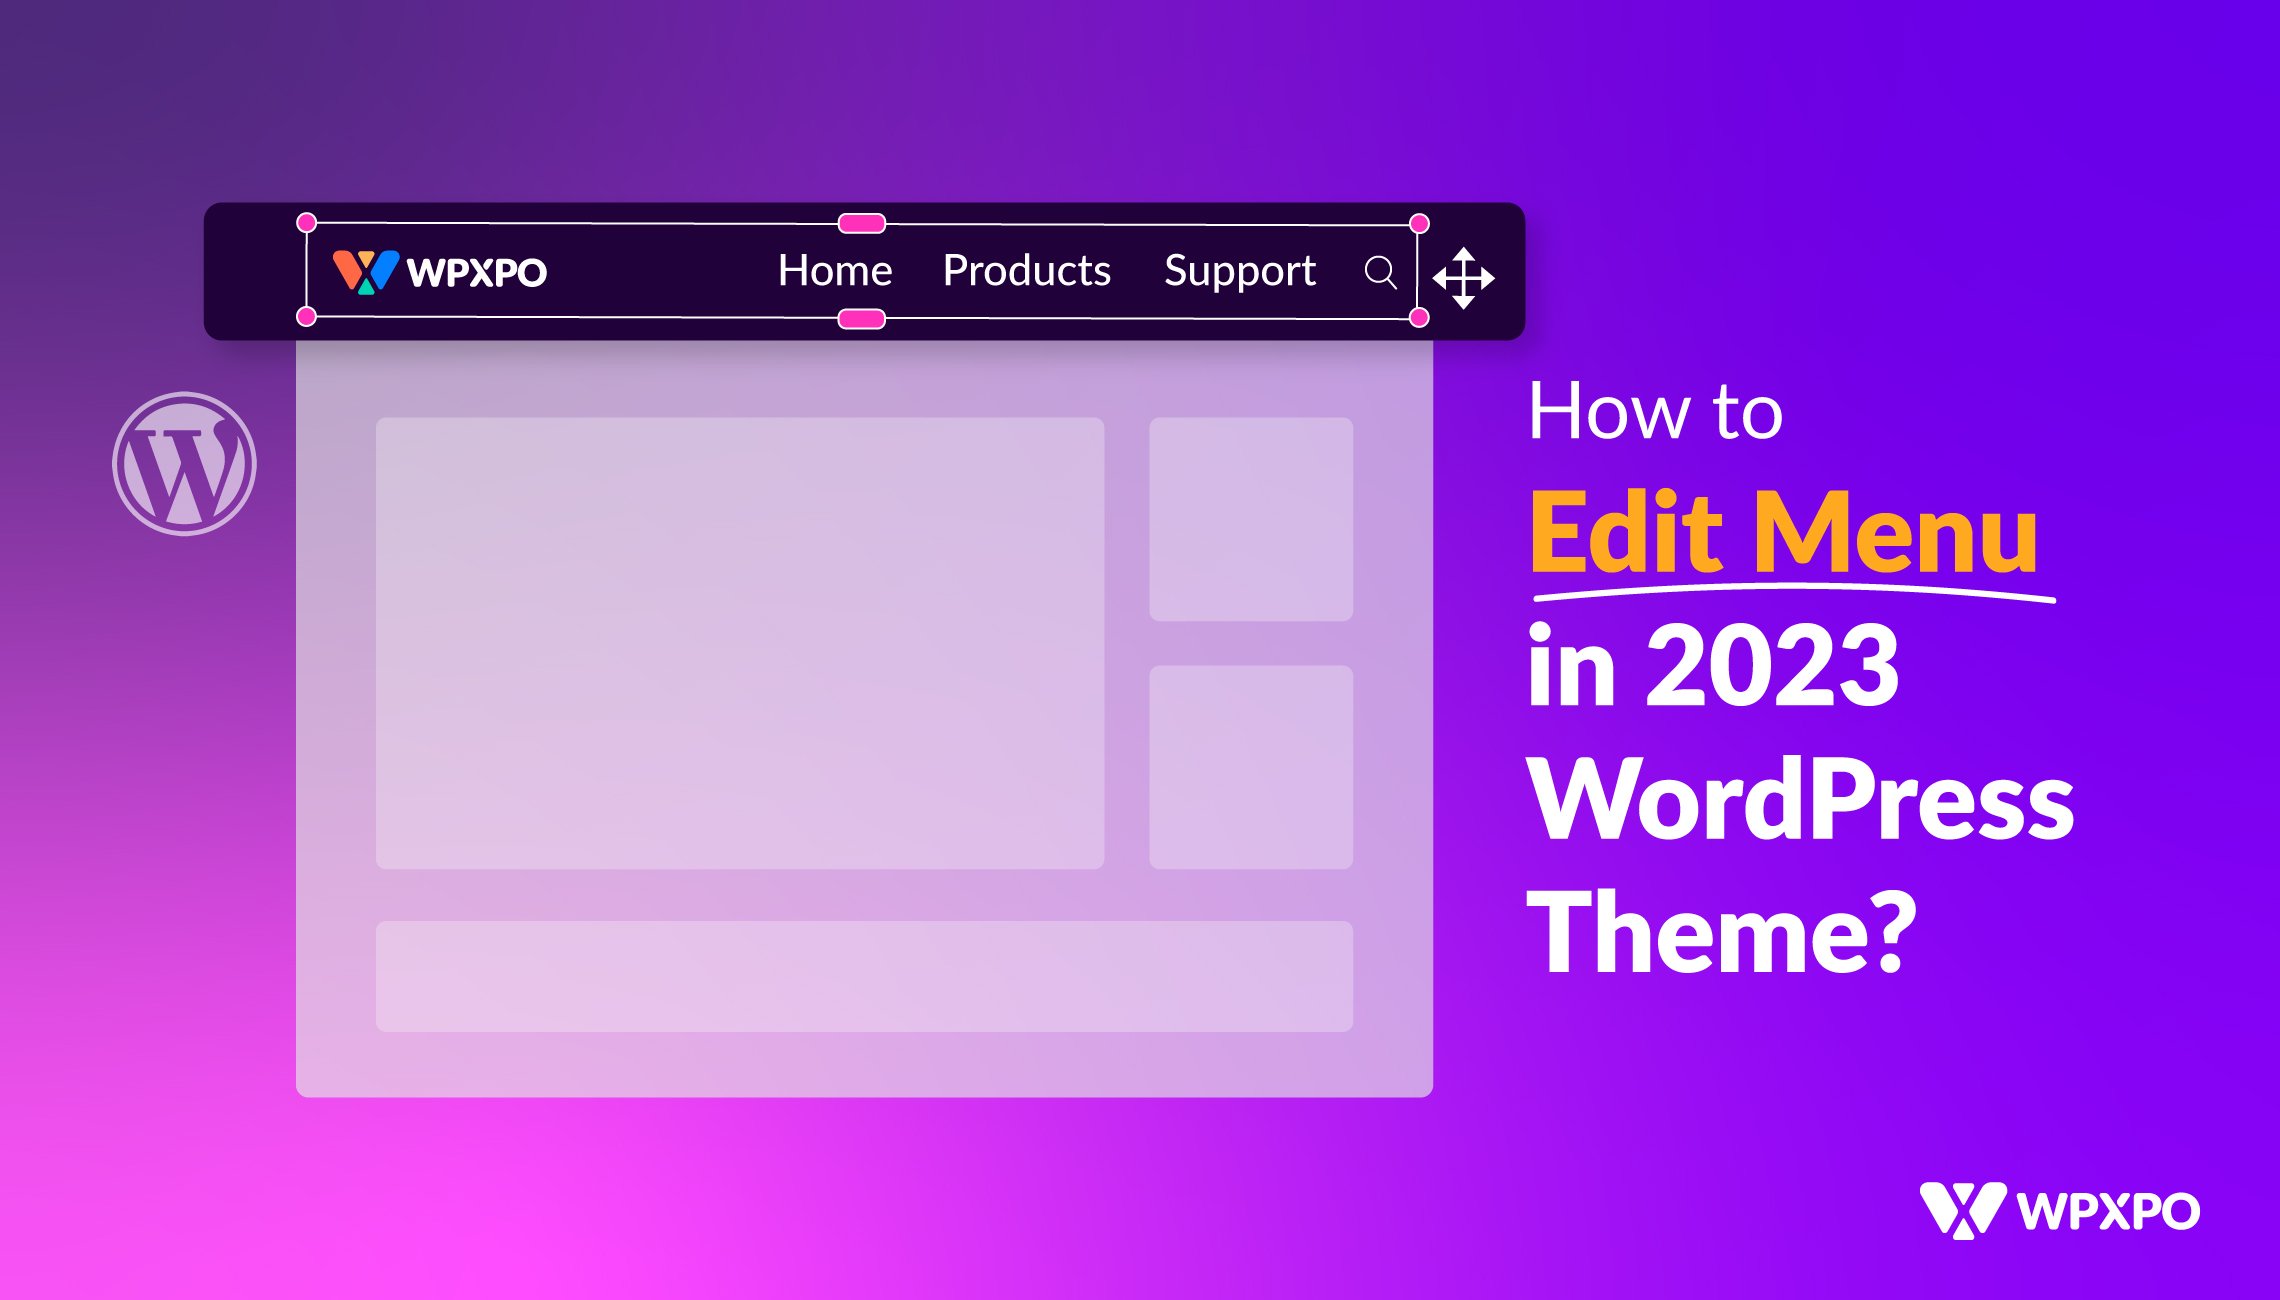 How to Edit Menu in WordPress 2023 Theme?